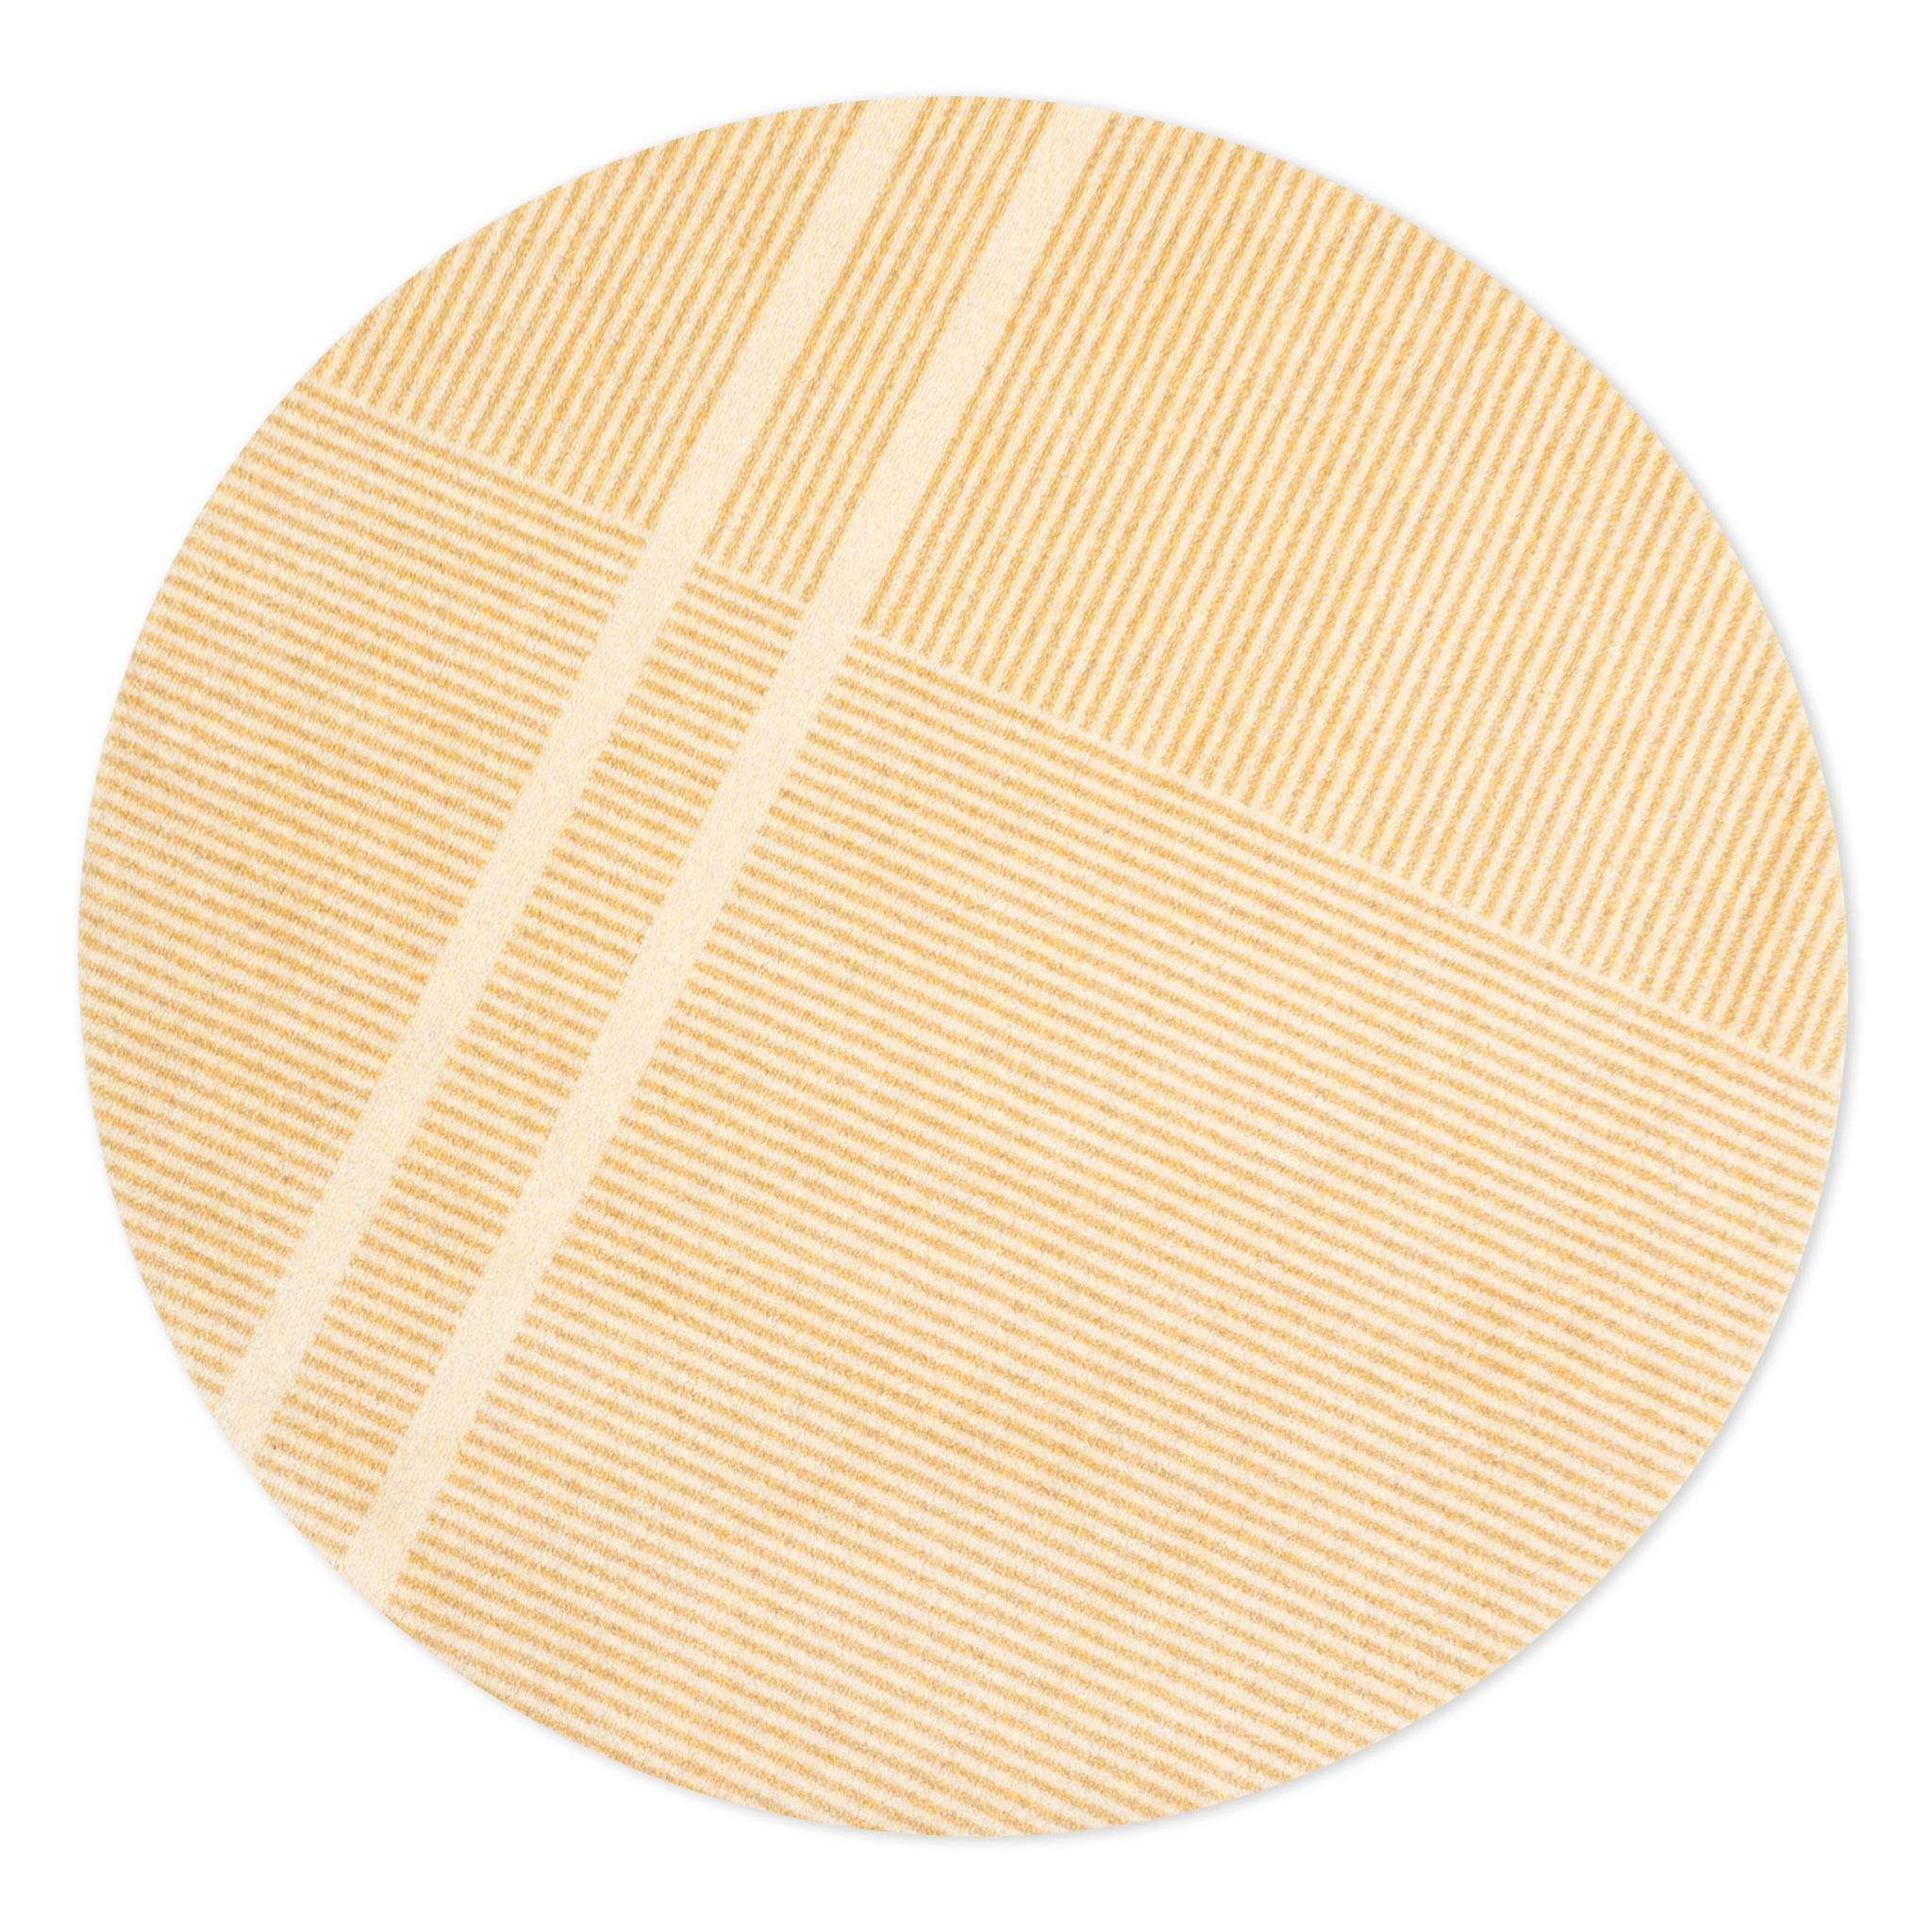 Heymat Doormat løype solrige gul, 150x150 cm